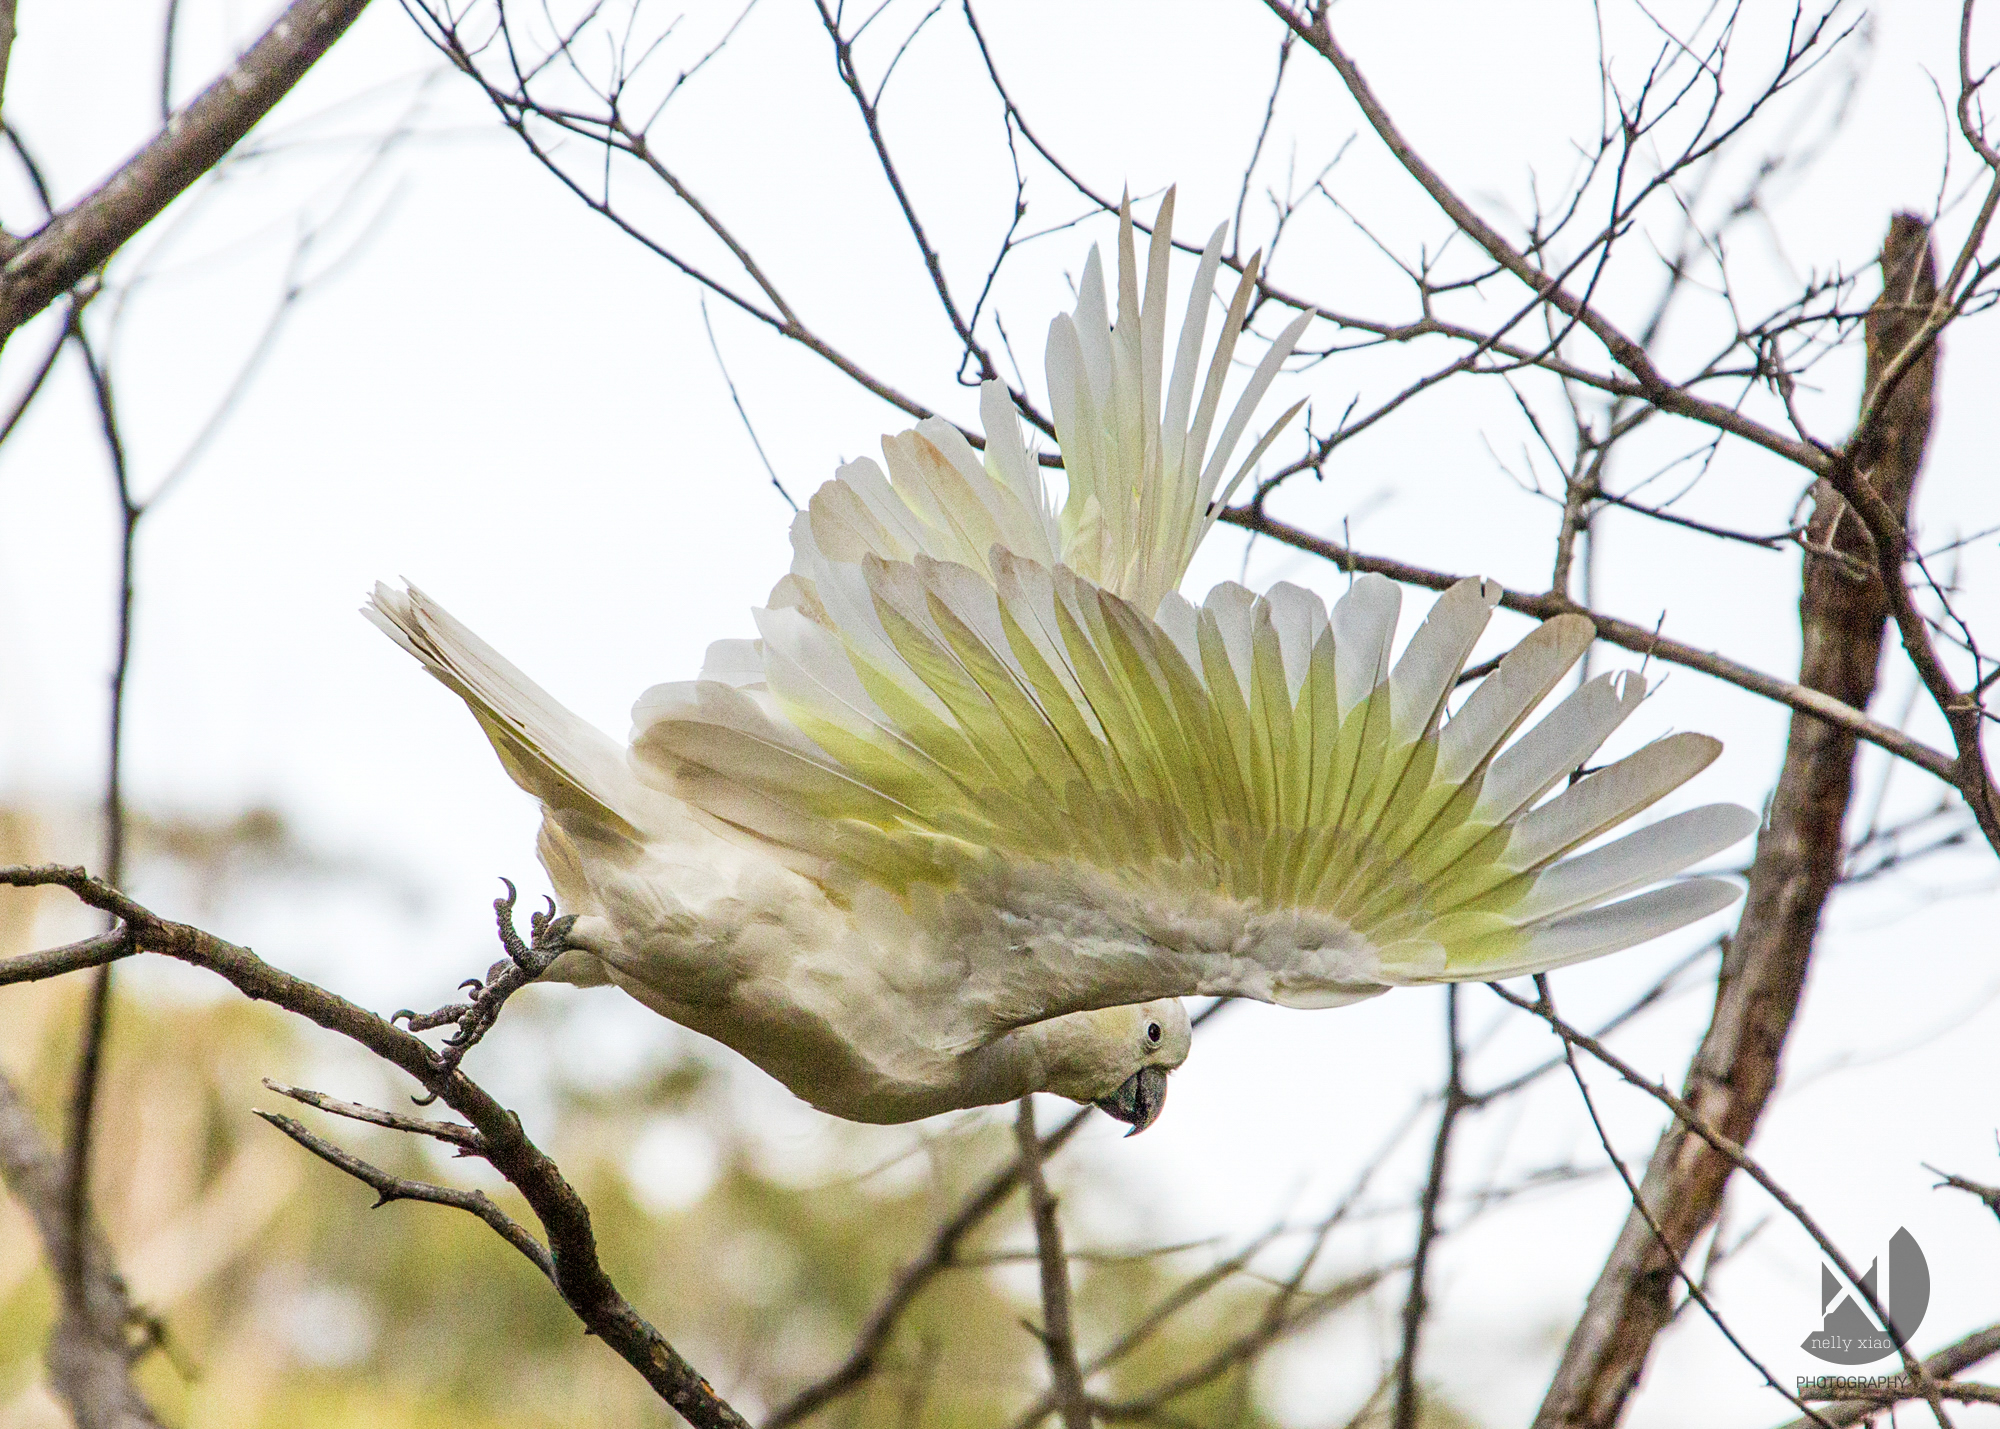   Sulfur-crested cockatoo   Royal National Park NSW, 2016 